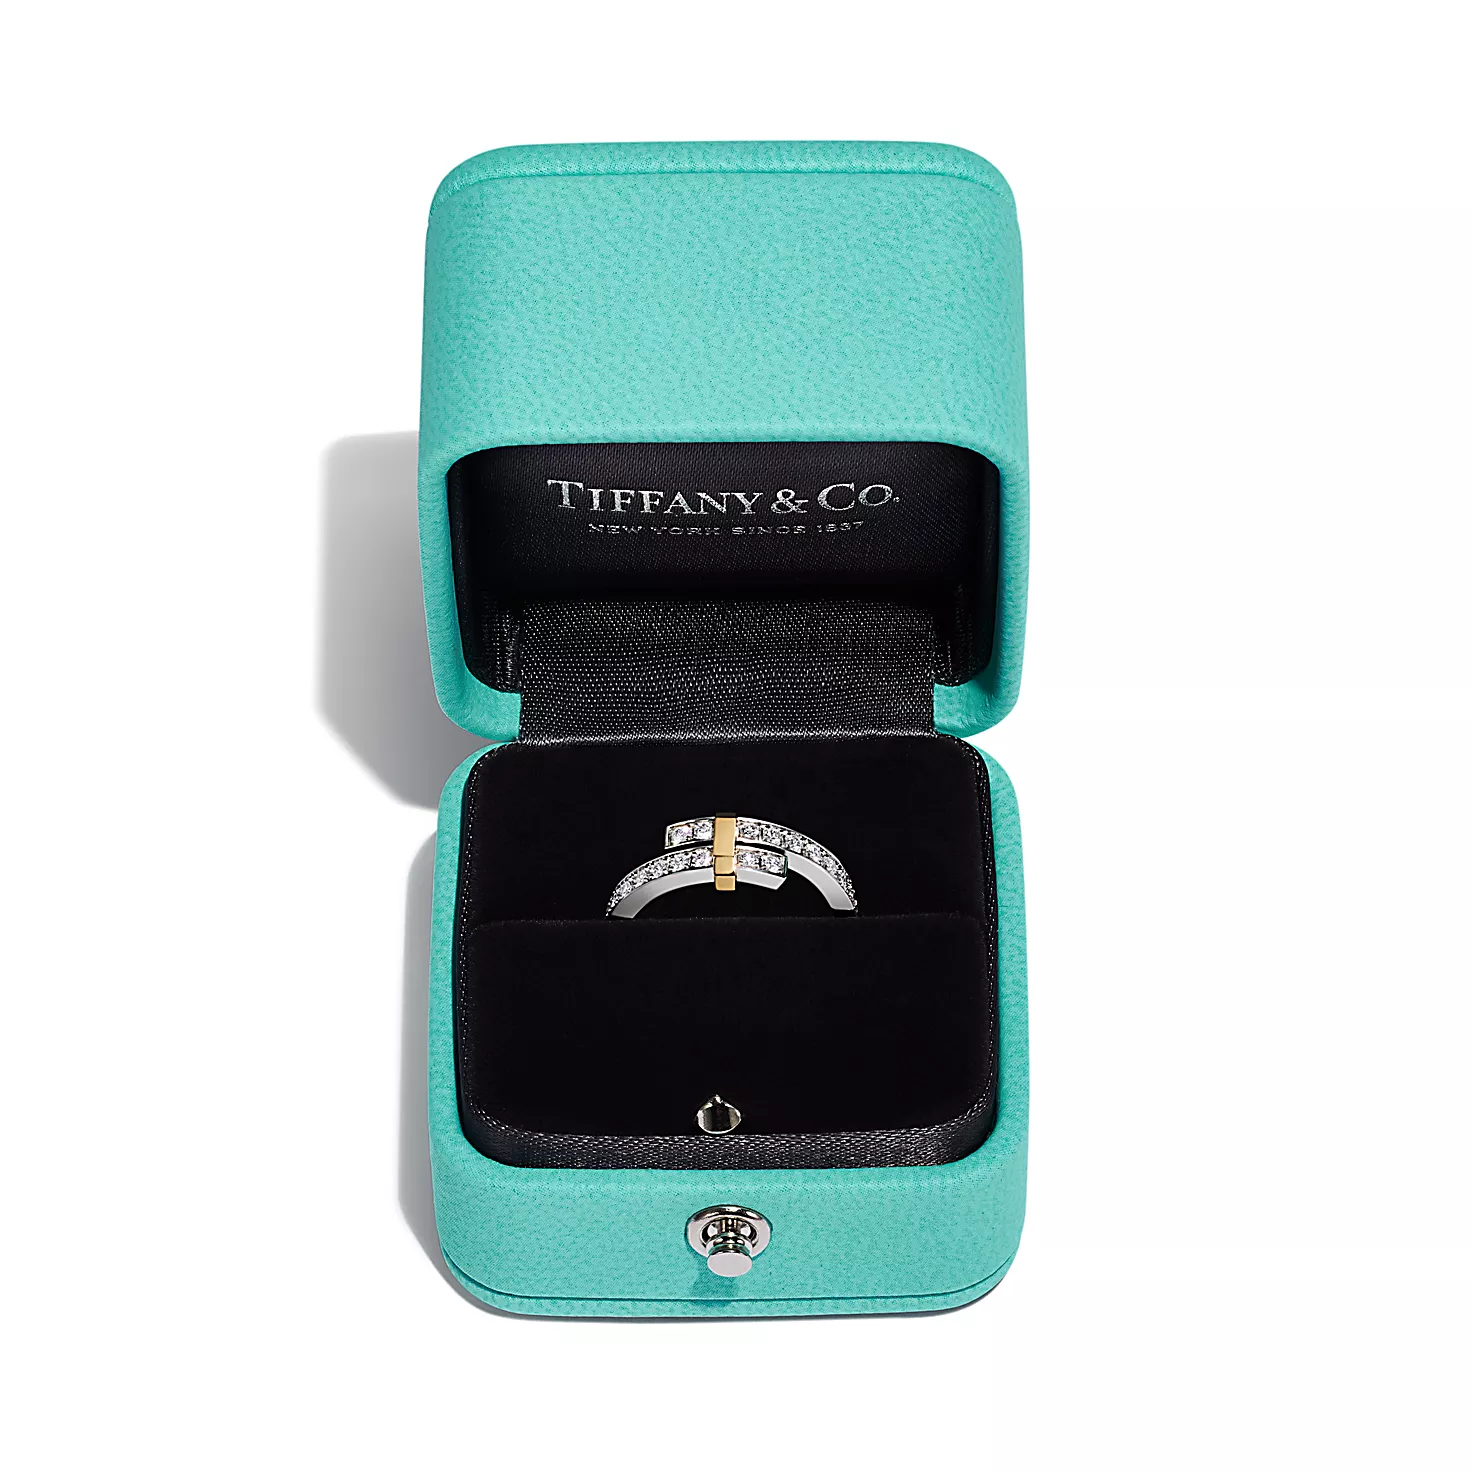 Tiffany Edge:바이패스 링, 플래티늄 및 옐로우 골드, 다이아몬드 세팅, 네로우 이미지 번호 4